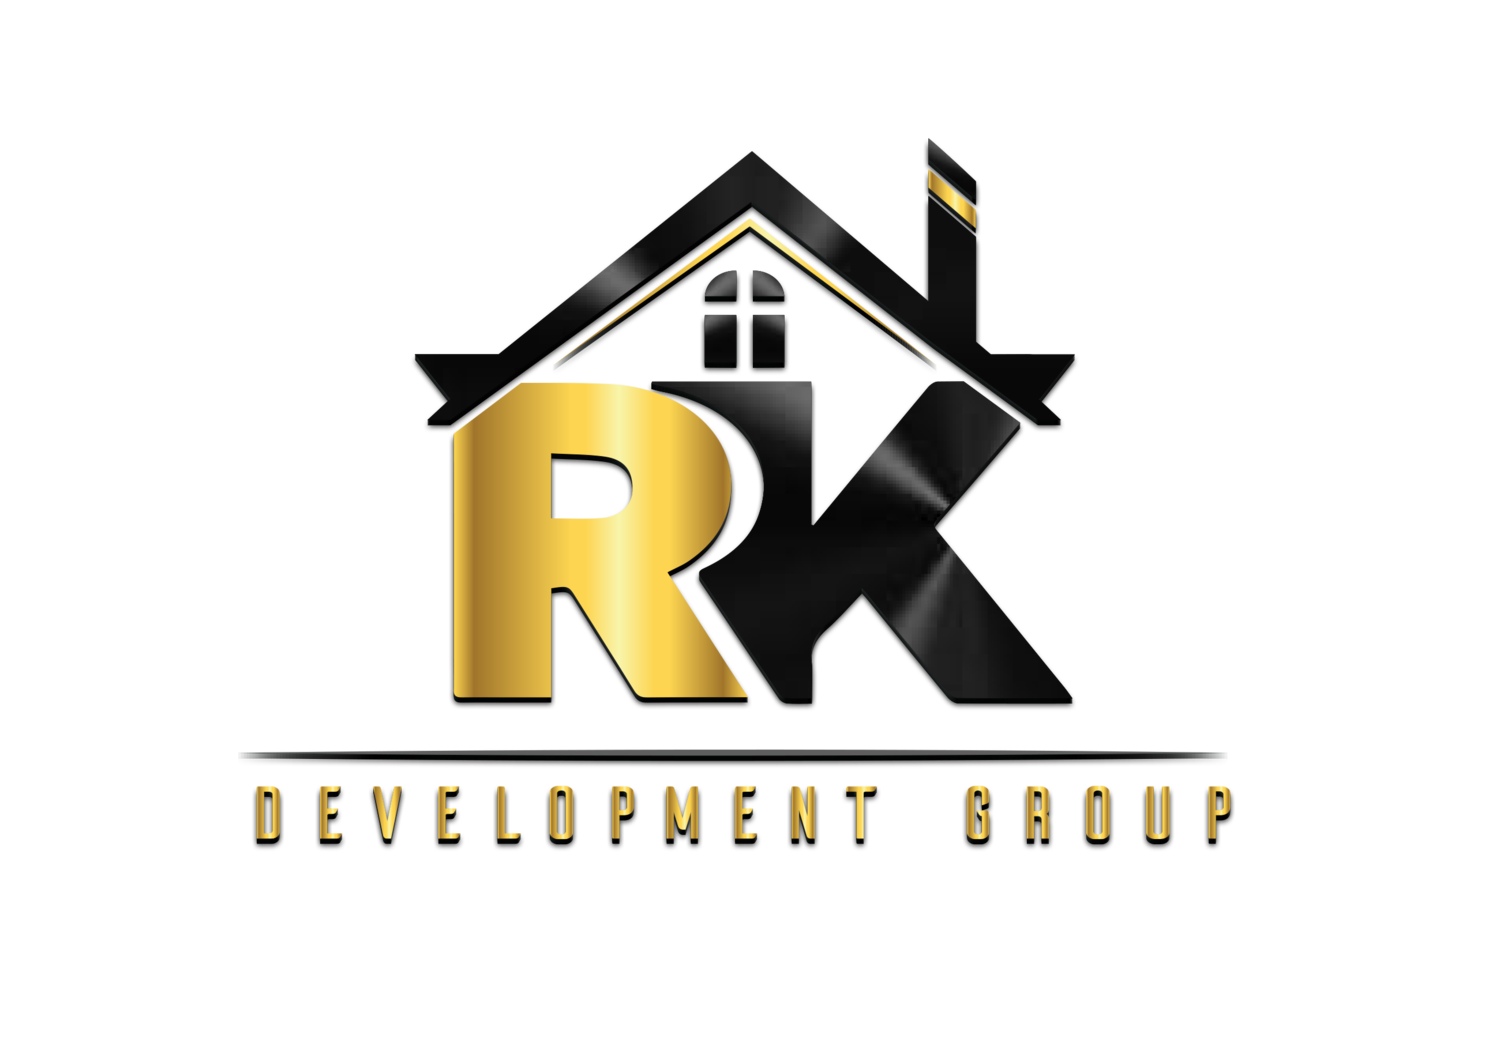 RK Development Group